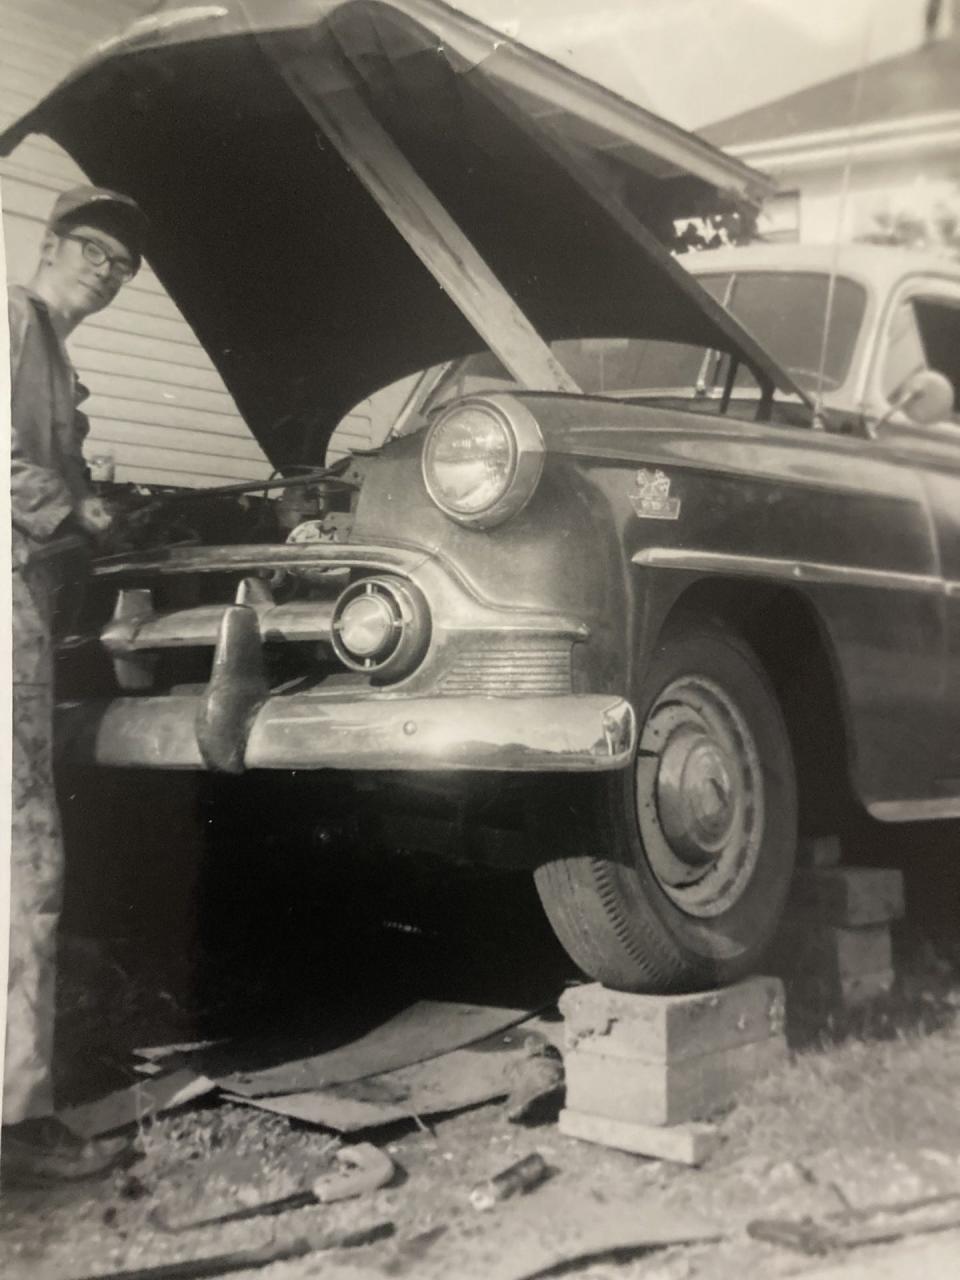 John Simon, many years ago, with his 1953 Chevrolet.